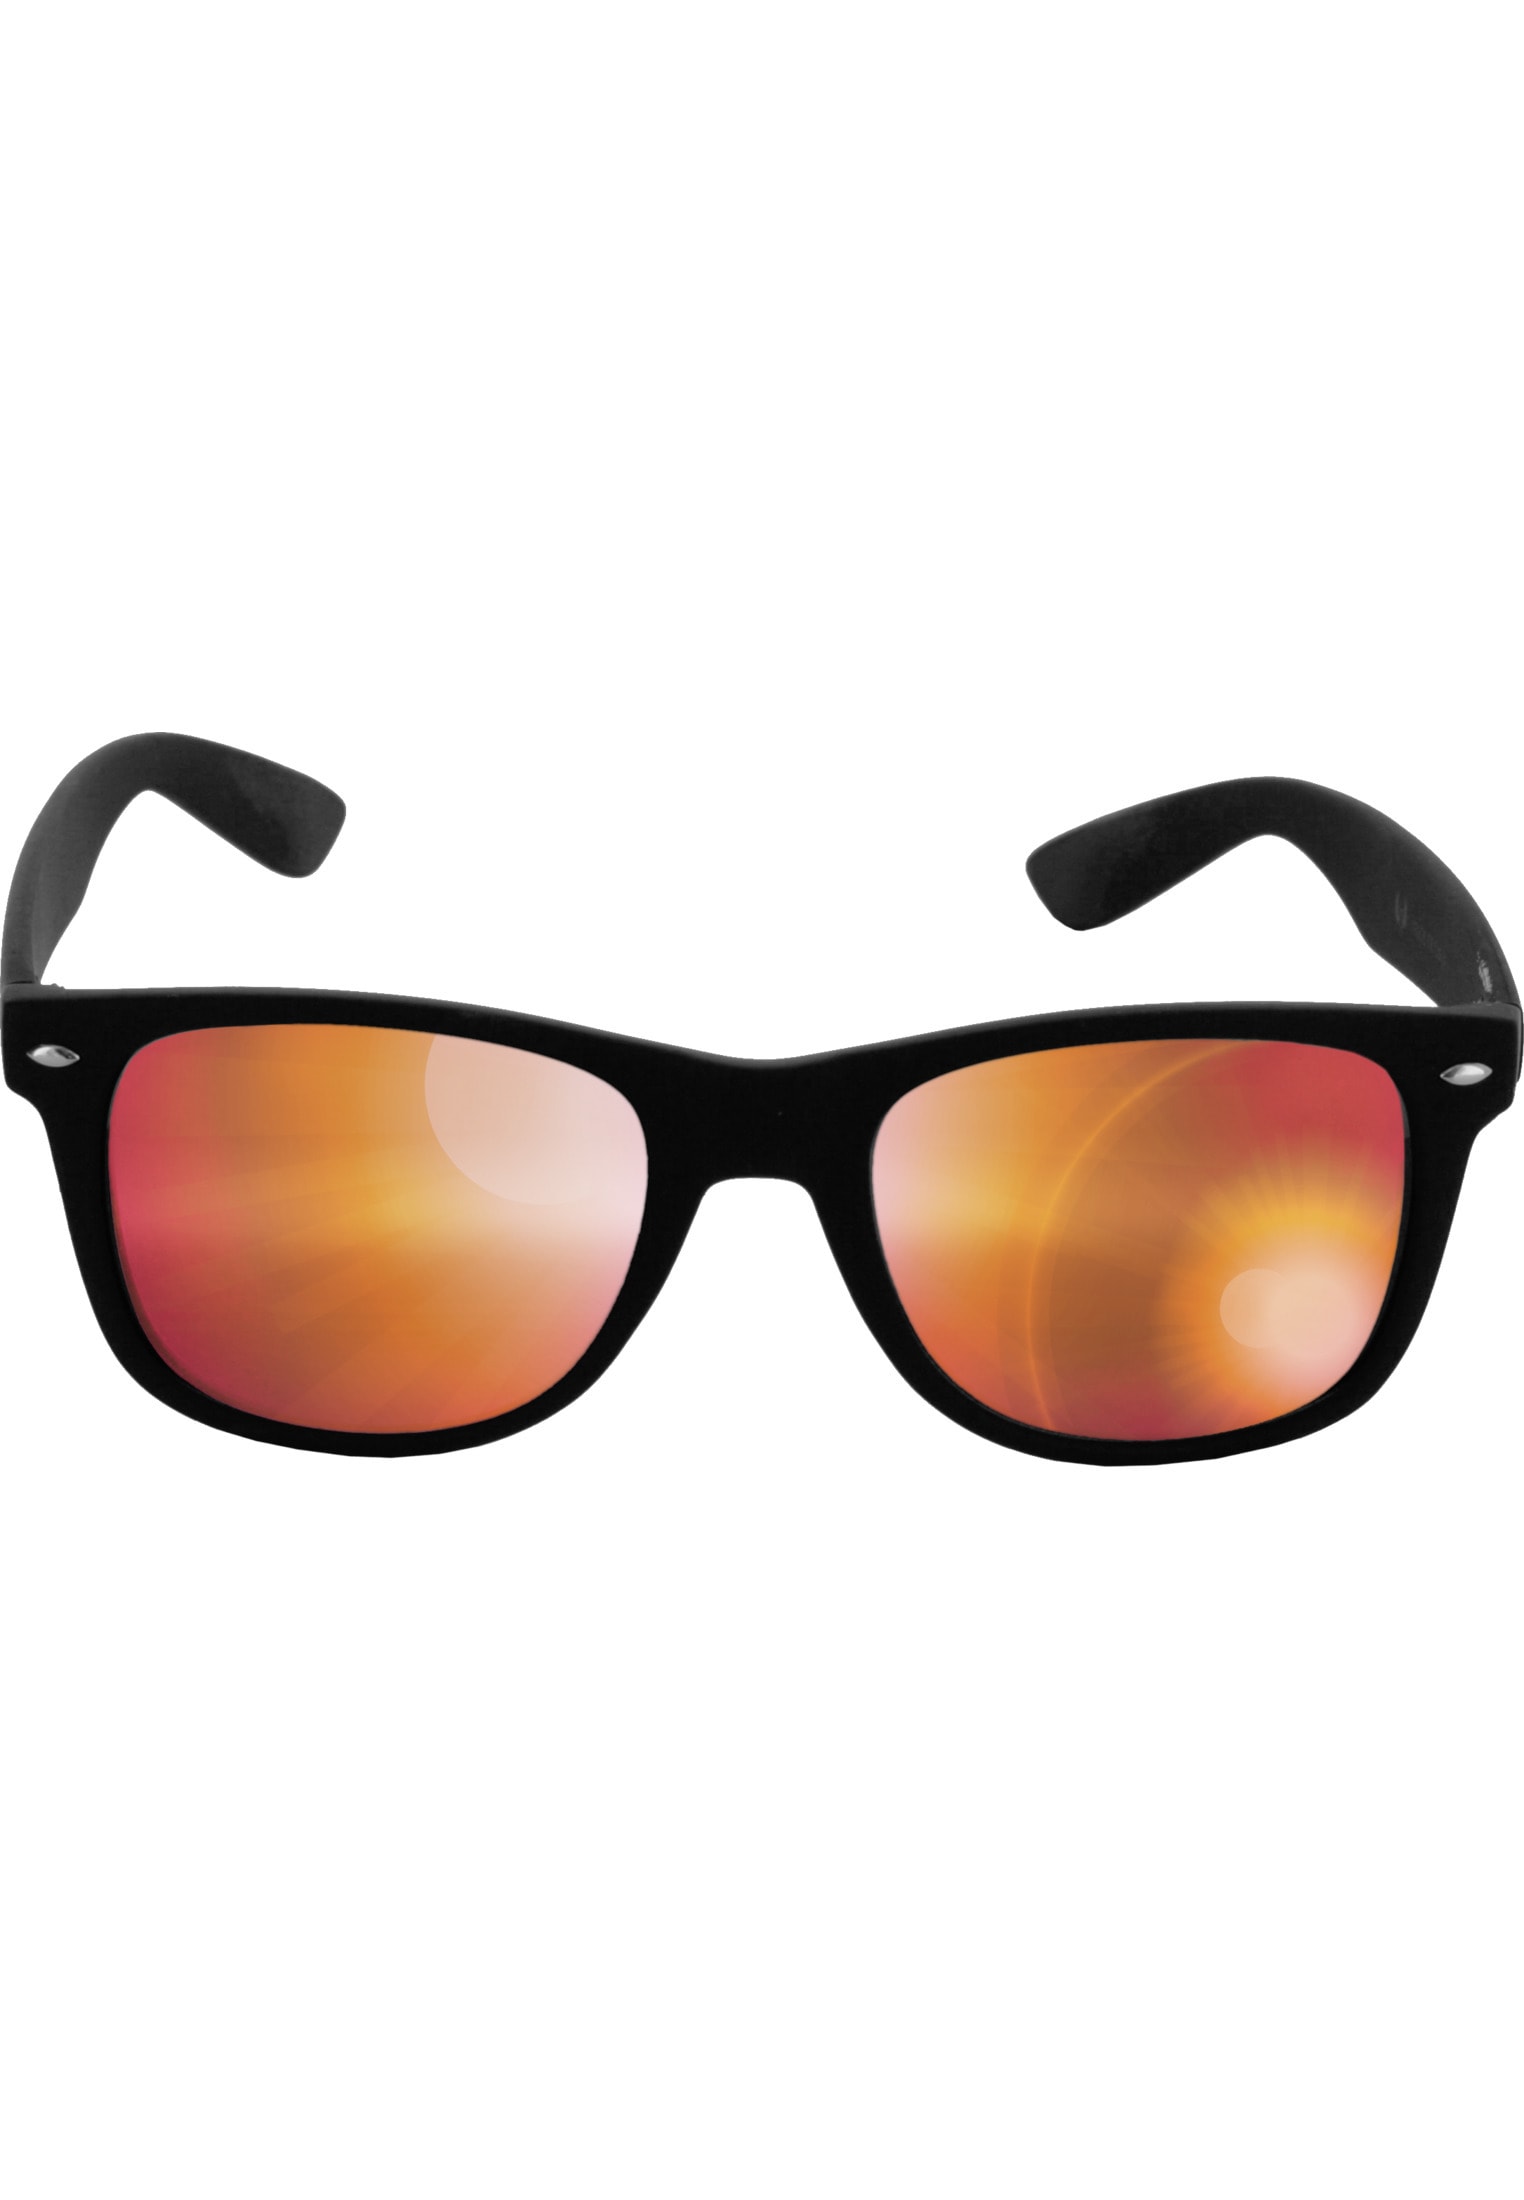 »Accessoires I\'m Likoma Sunglasses MSTRDS Sonnenbrille | walking Mirror«